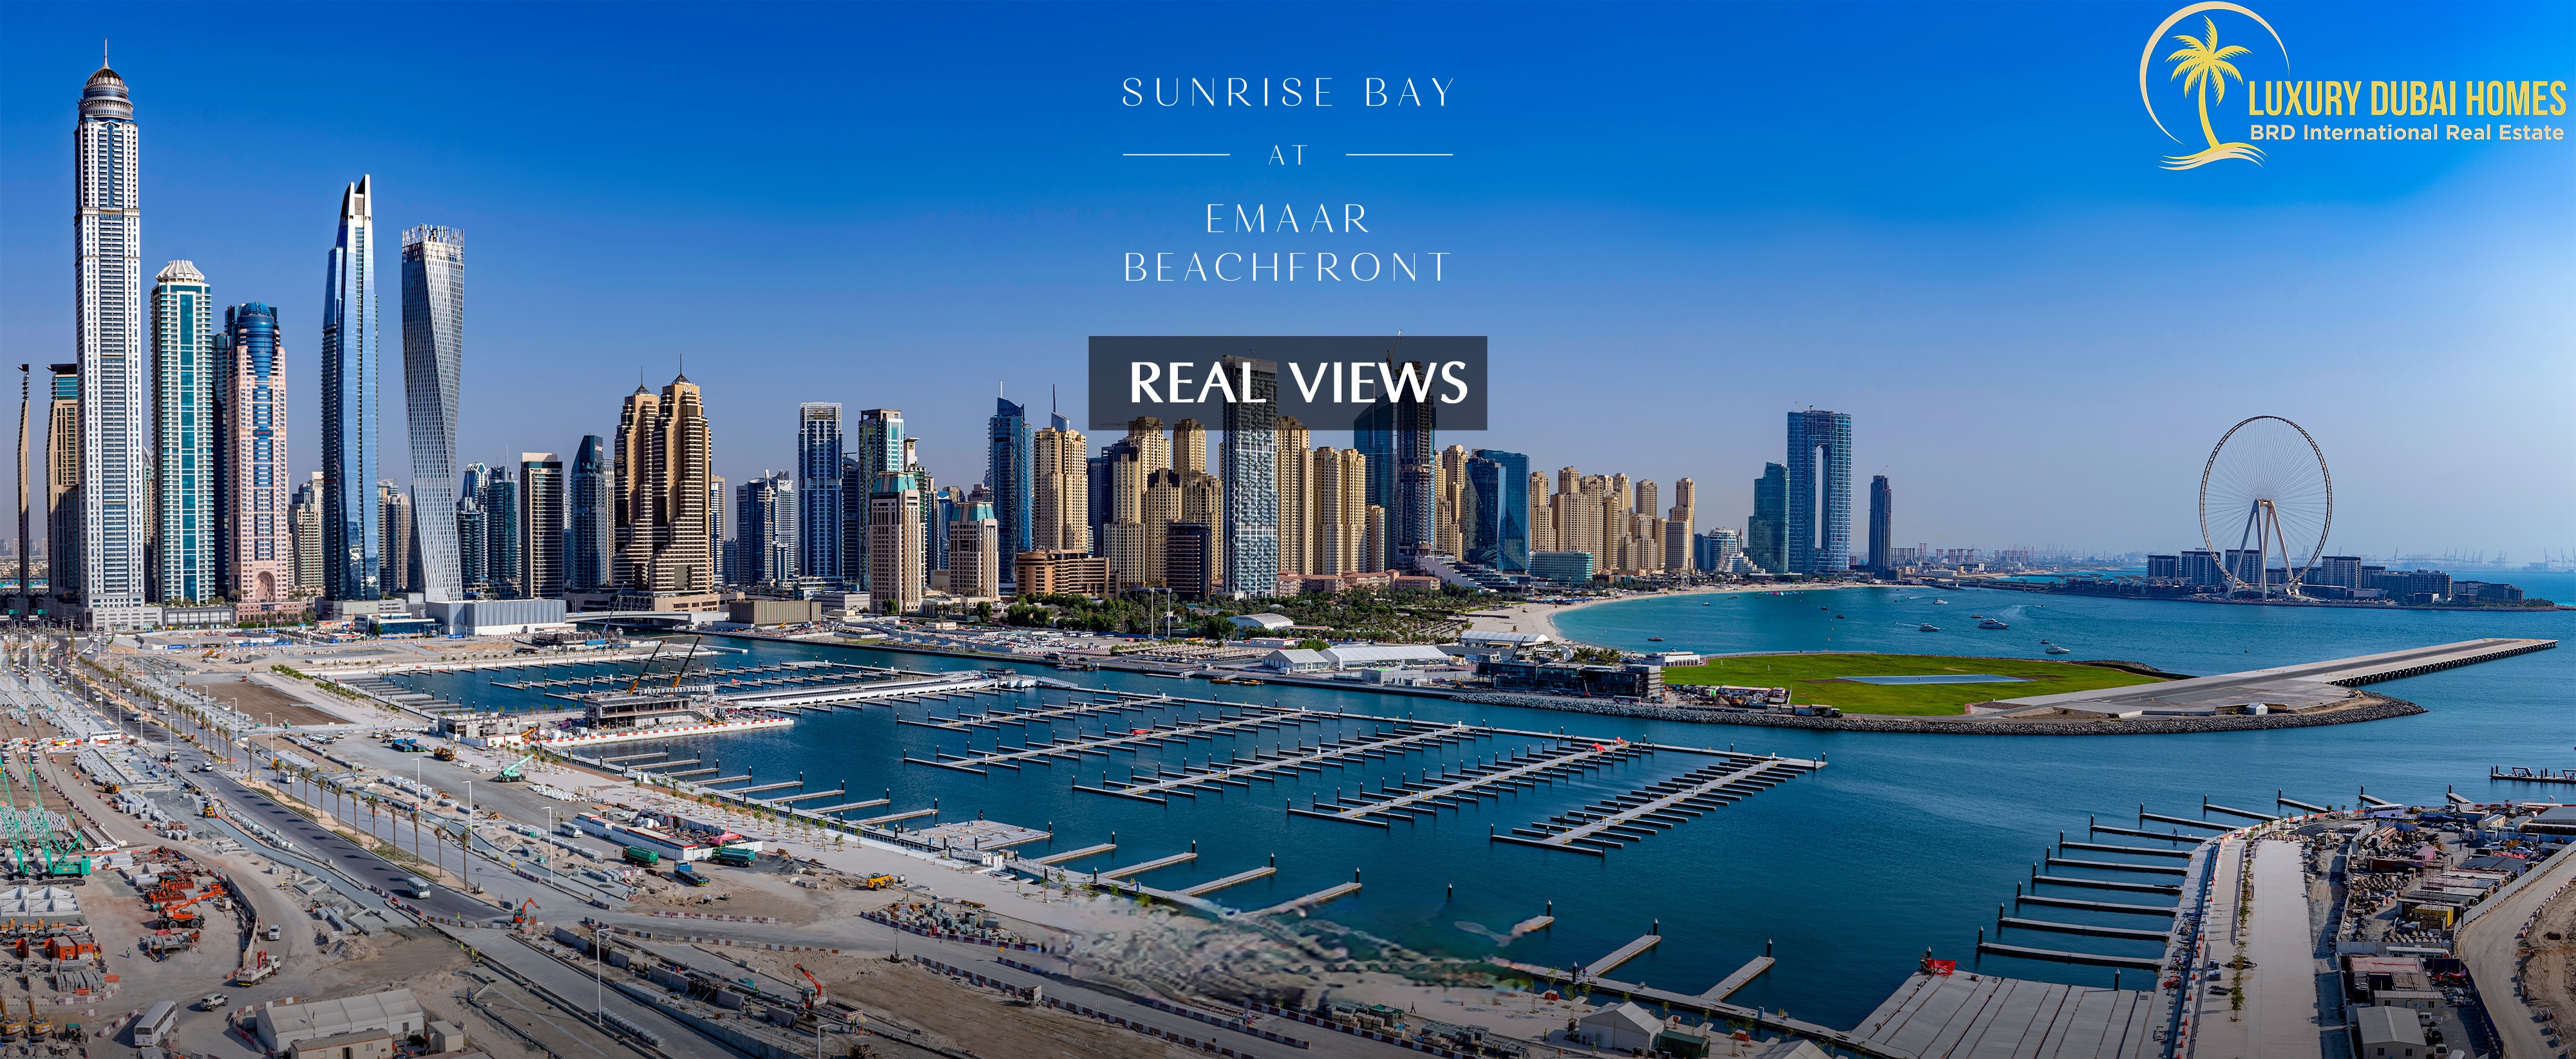 EBF_Sunrise_Bay_Real_Views-02